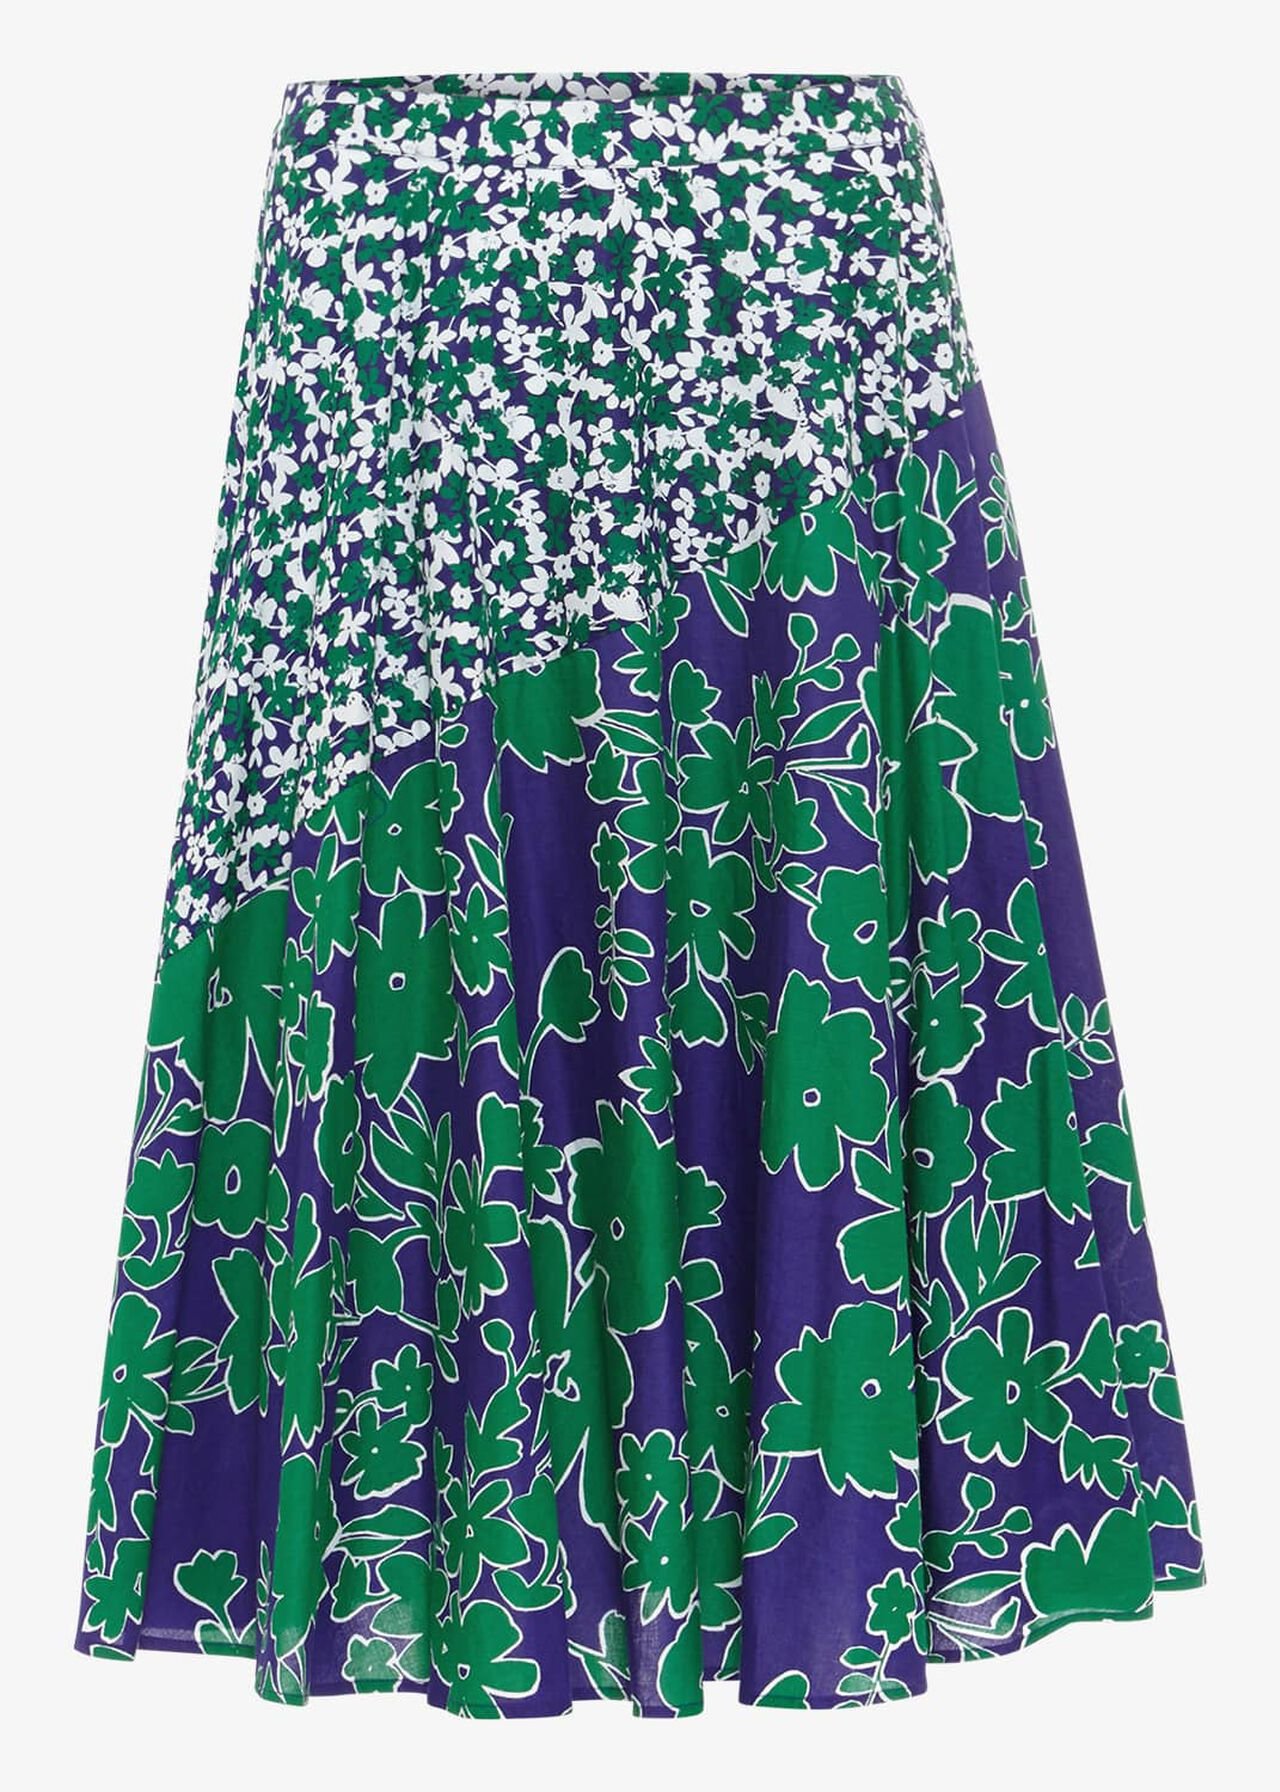 Eloise Floral Printed Skirt